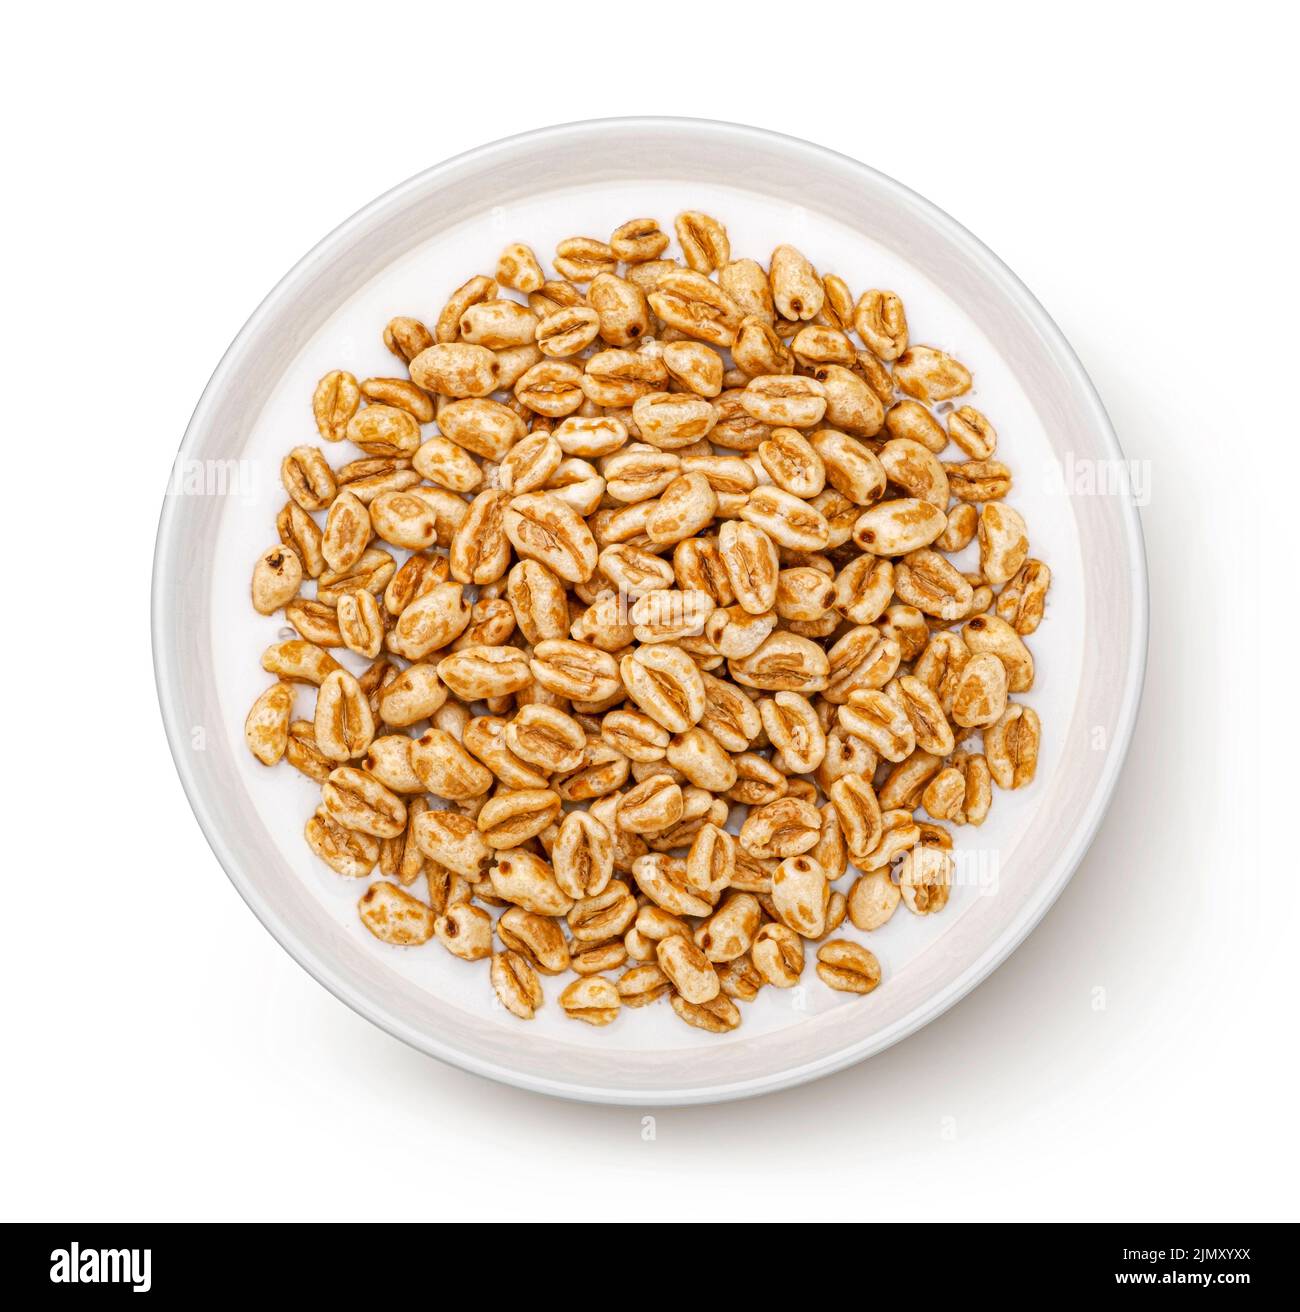 Puffed wheat cereal Imágenes recortadas de stock - Alamy